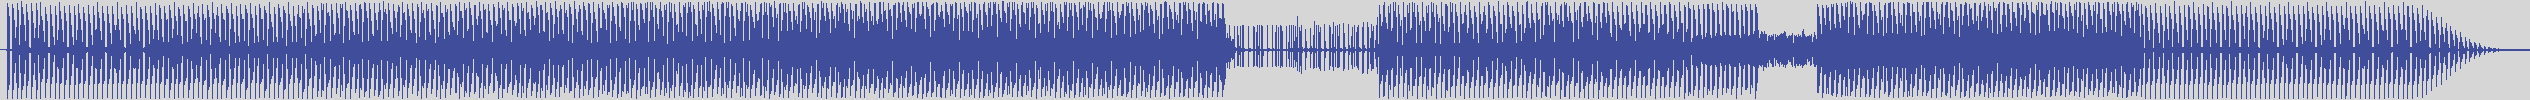 atomic_recordings [AR020] Kamasutra - Running Away [Green Sky Version] audio wave form